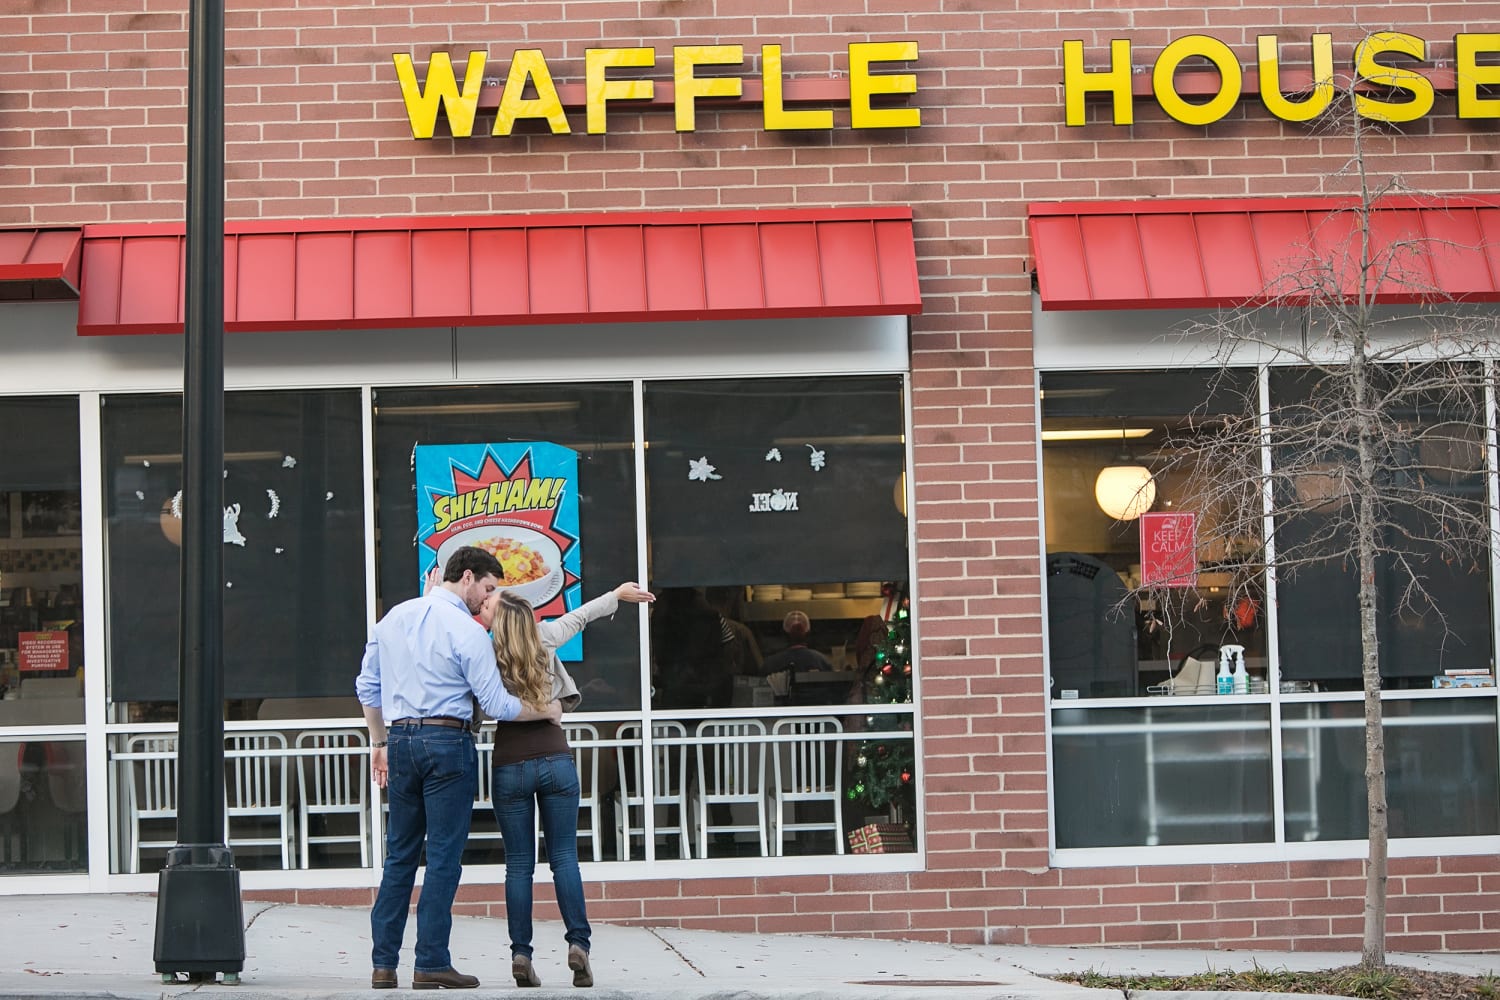 Waffle House - Let's celebrate Atlanta! Happy #404Day!